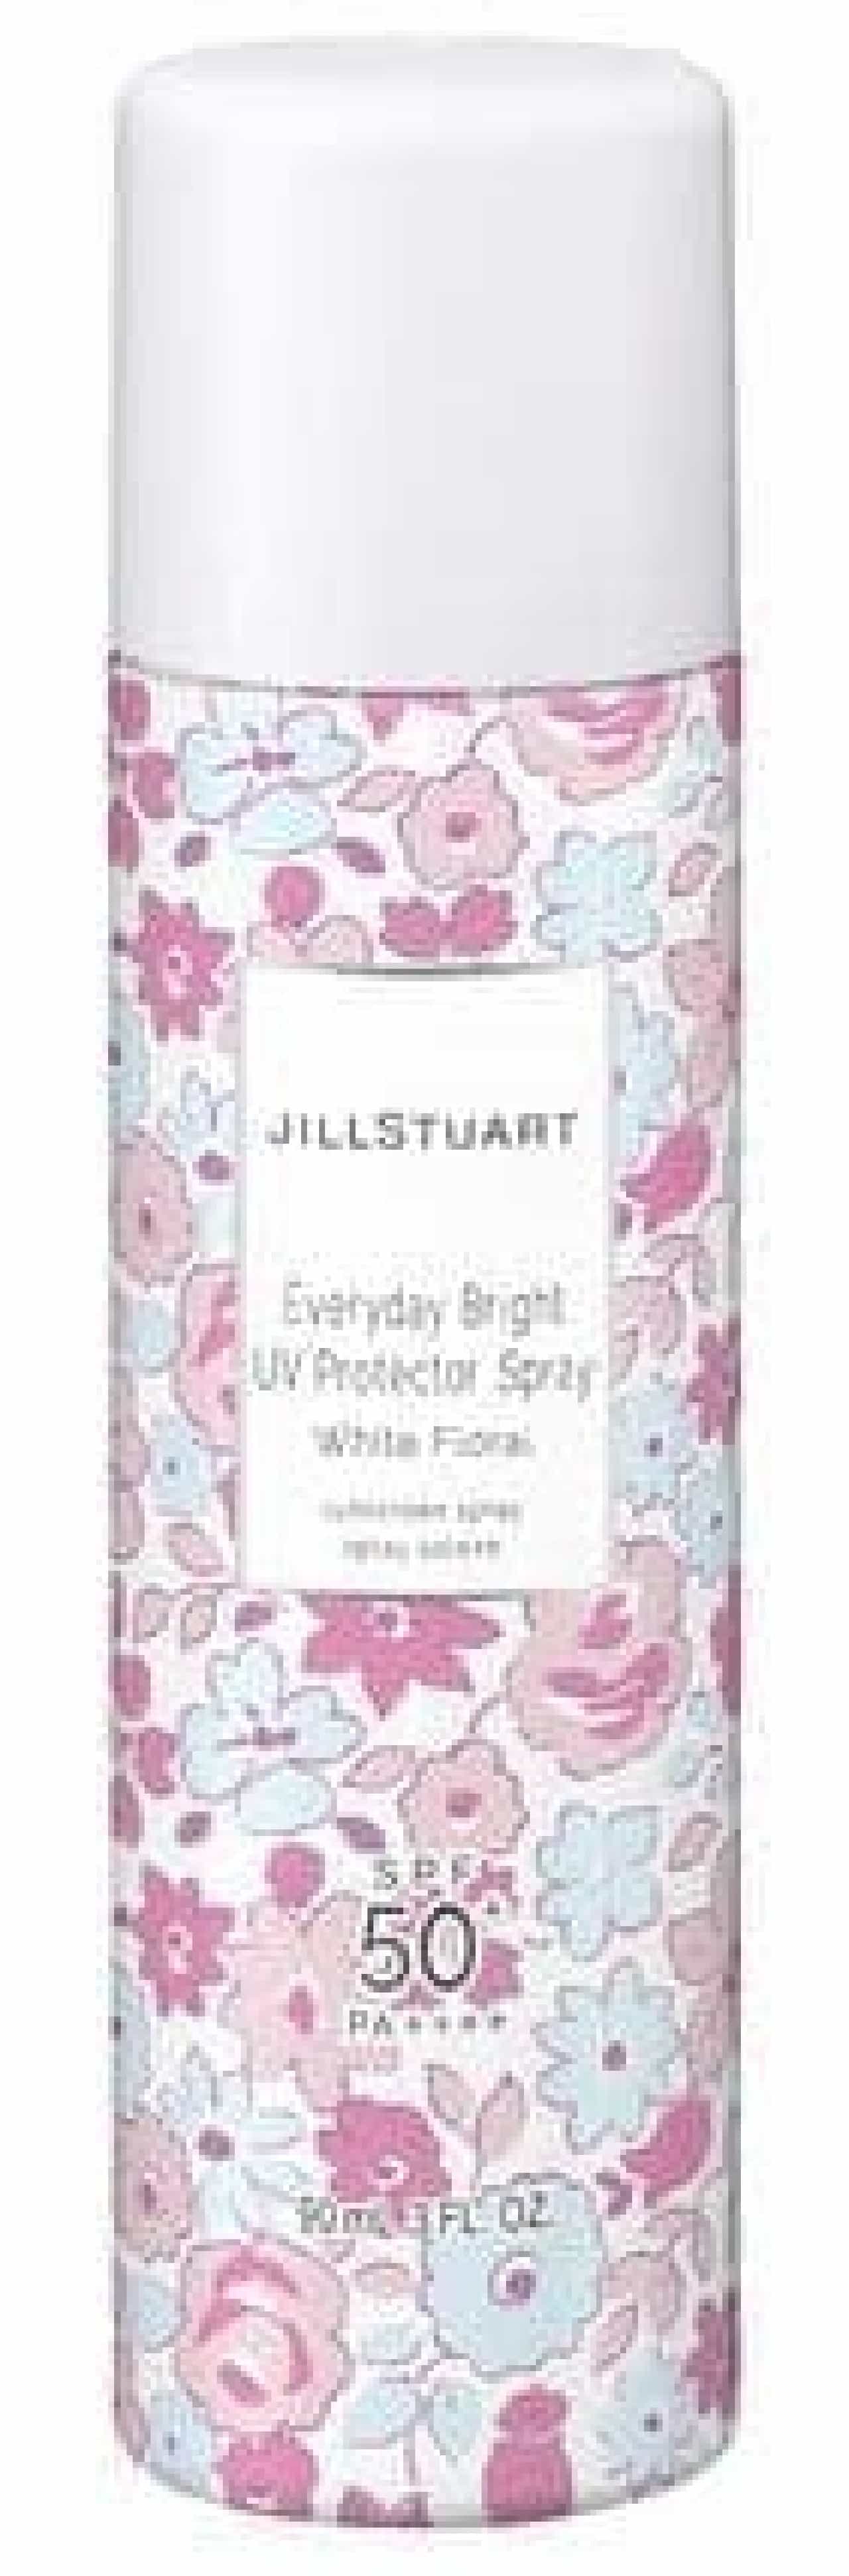 Jill Stuart Beauty "Everyday Bright UV Protector Spray White Floral"